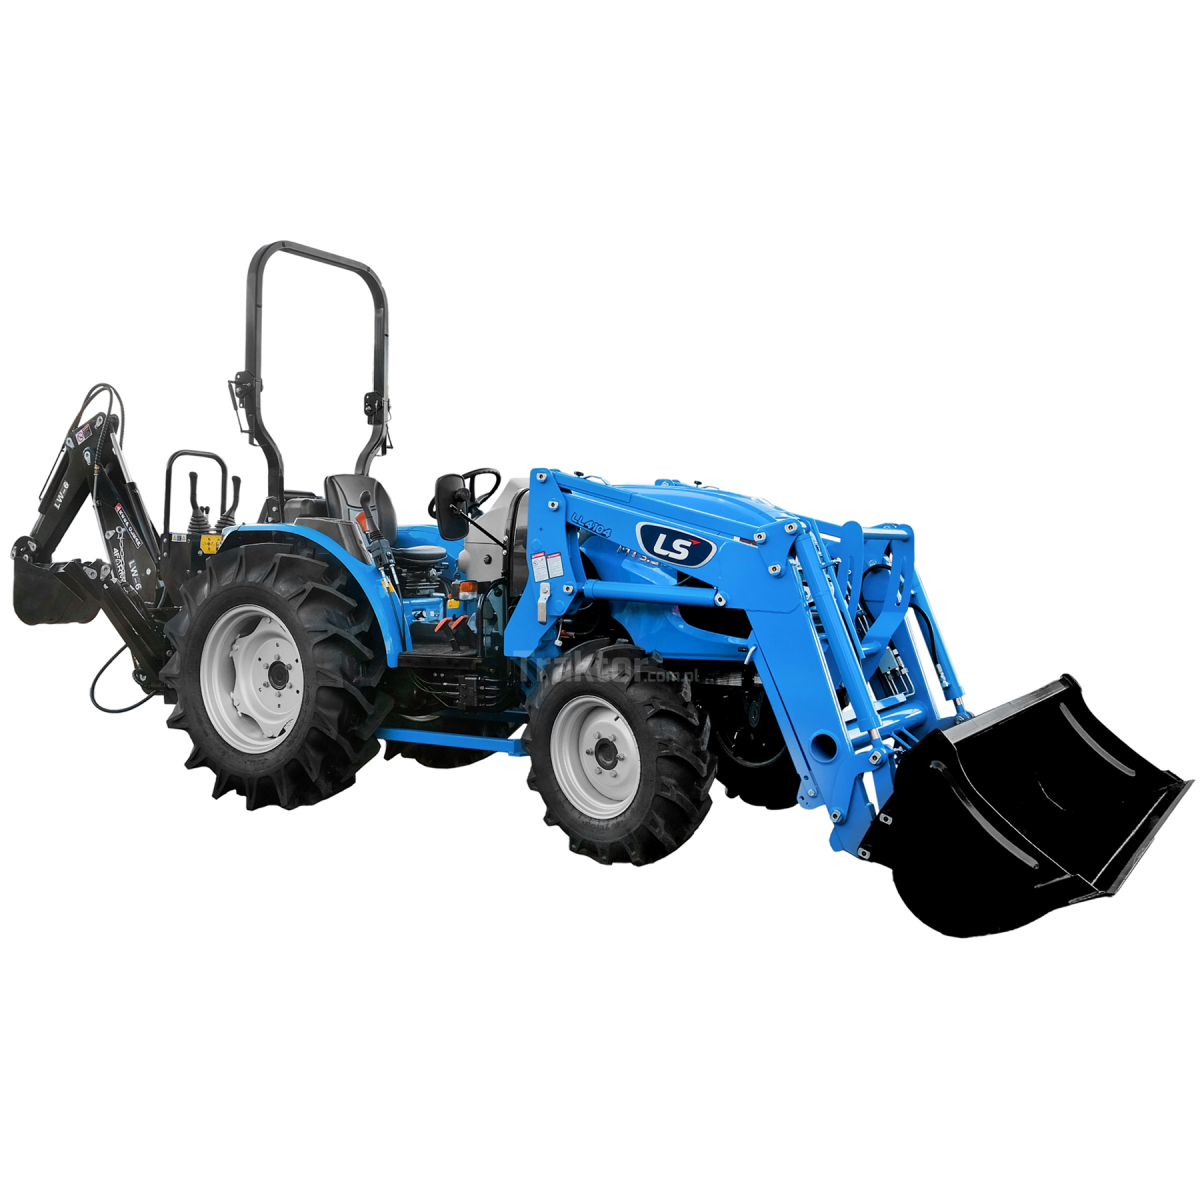 LS-Traktor MT3.50 HST 4x4 - 47 PS + Frontlader TUR LS LL4104 + Bagger für LW-6 4FARMER-Traktor